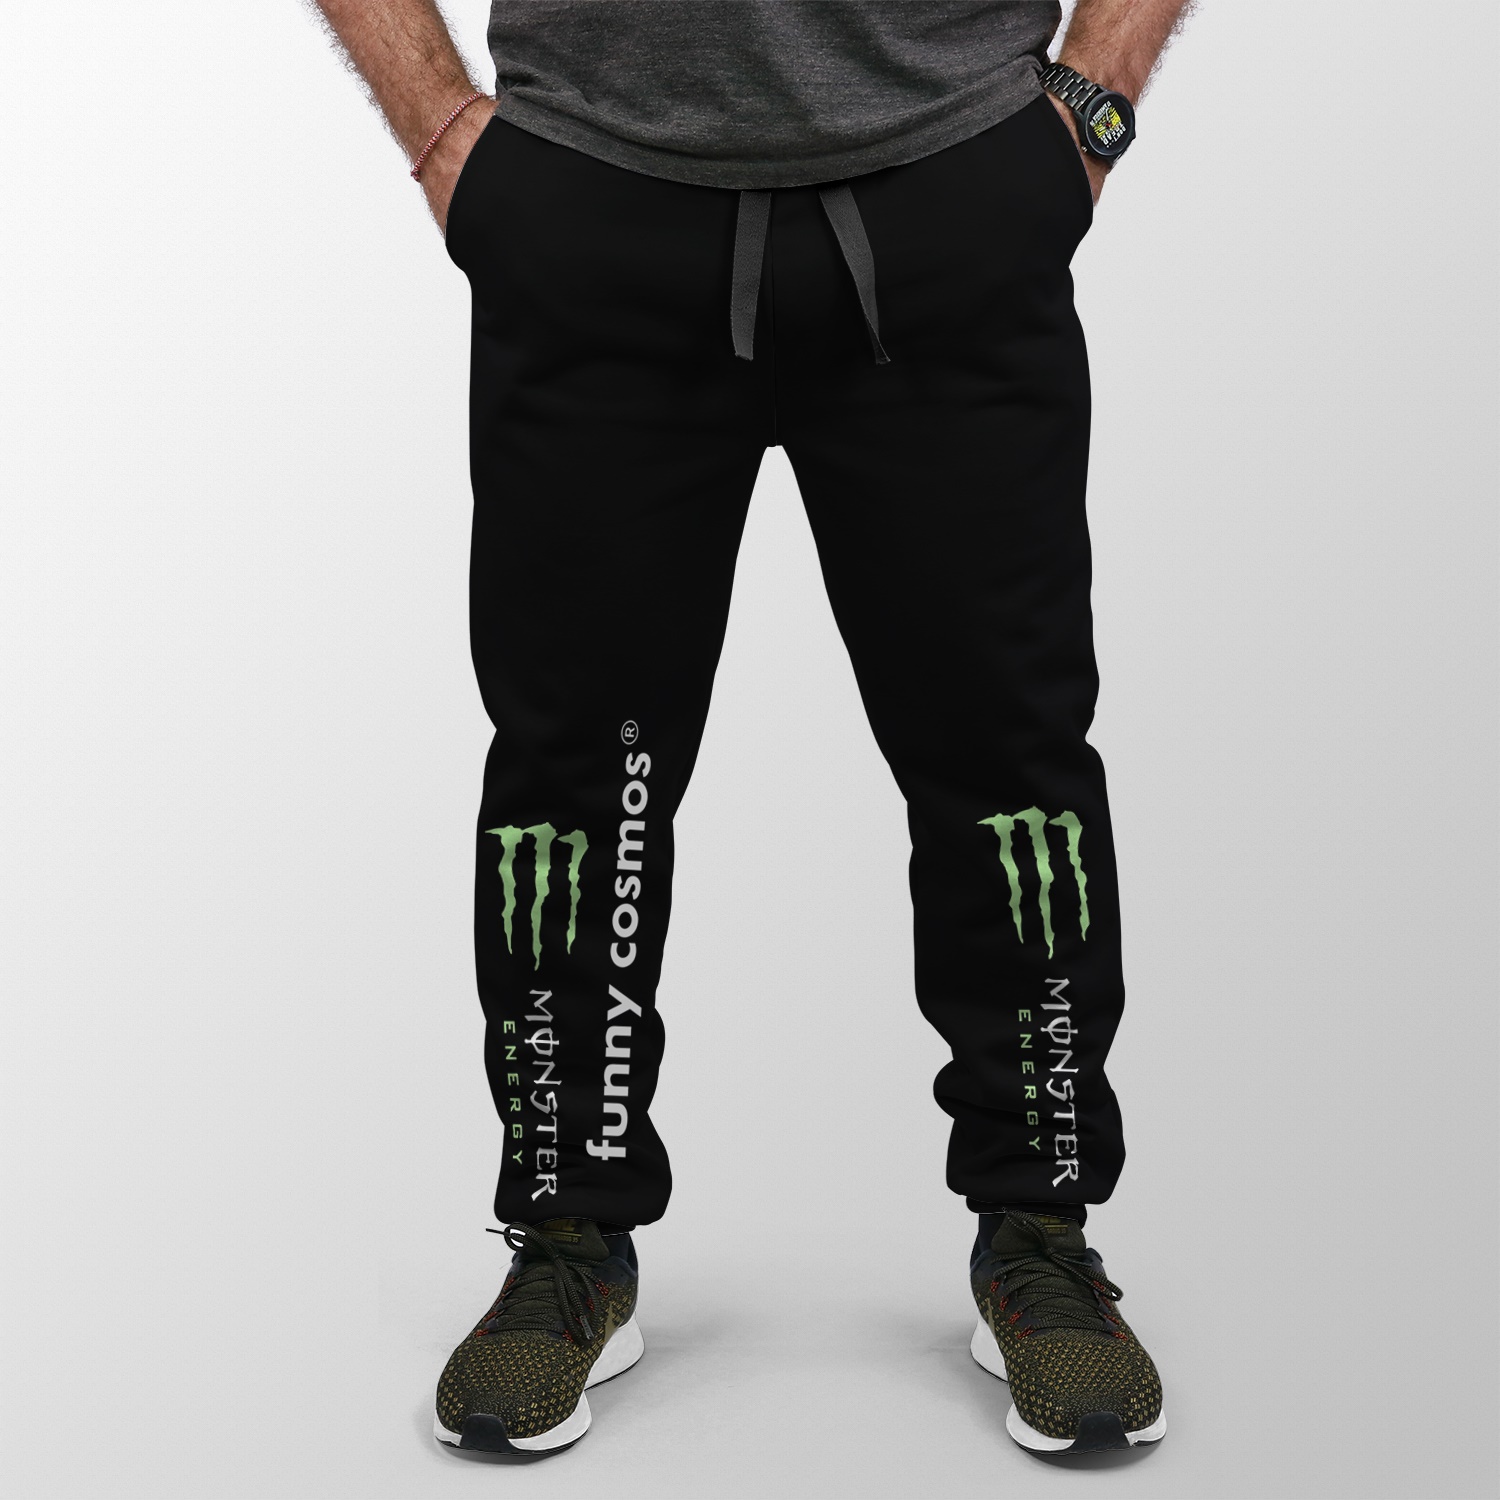 Kurt Busch Nascar 2022 Shirt Hoodie Racing Uniform Clothes Sweatshirt Zip Hoodie Sweatpant